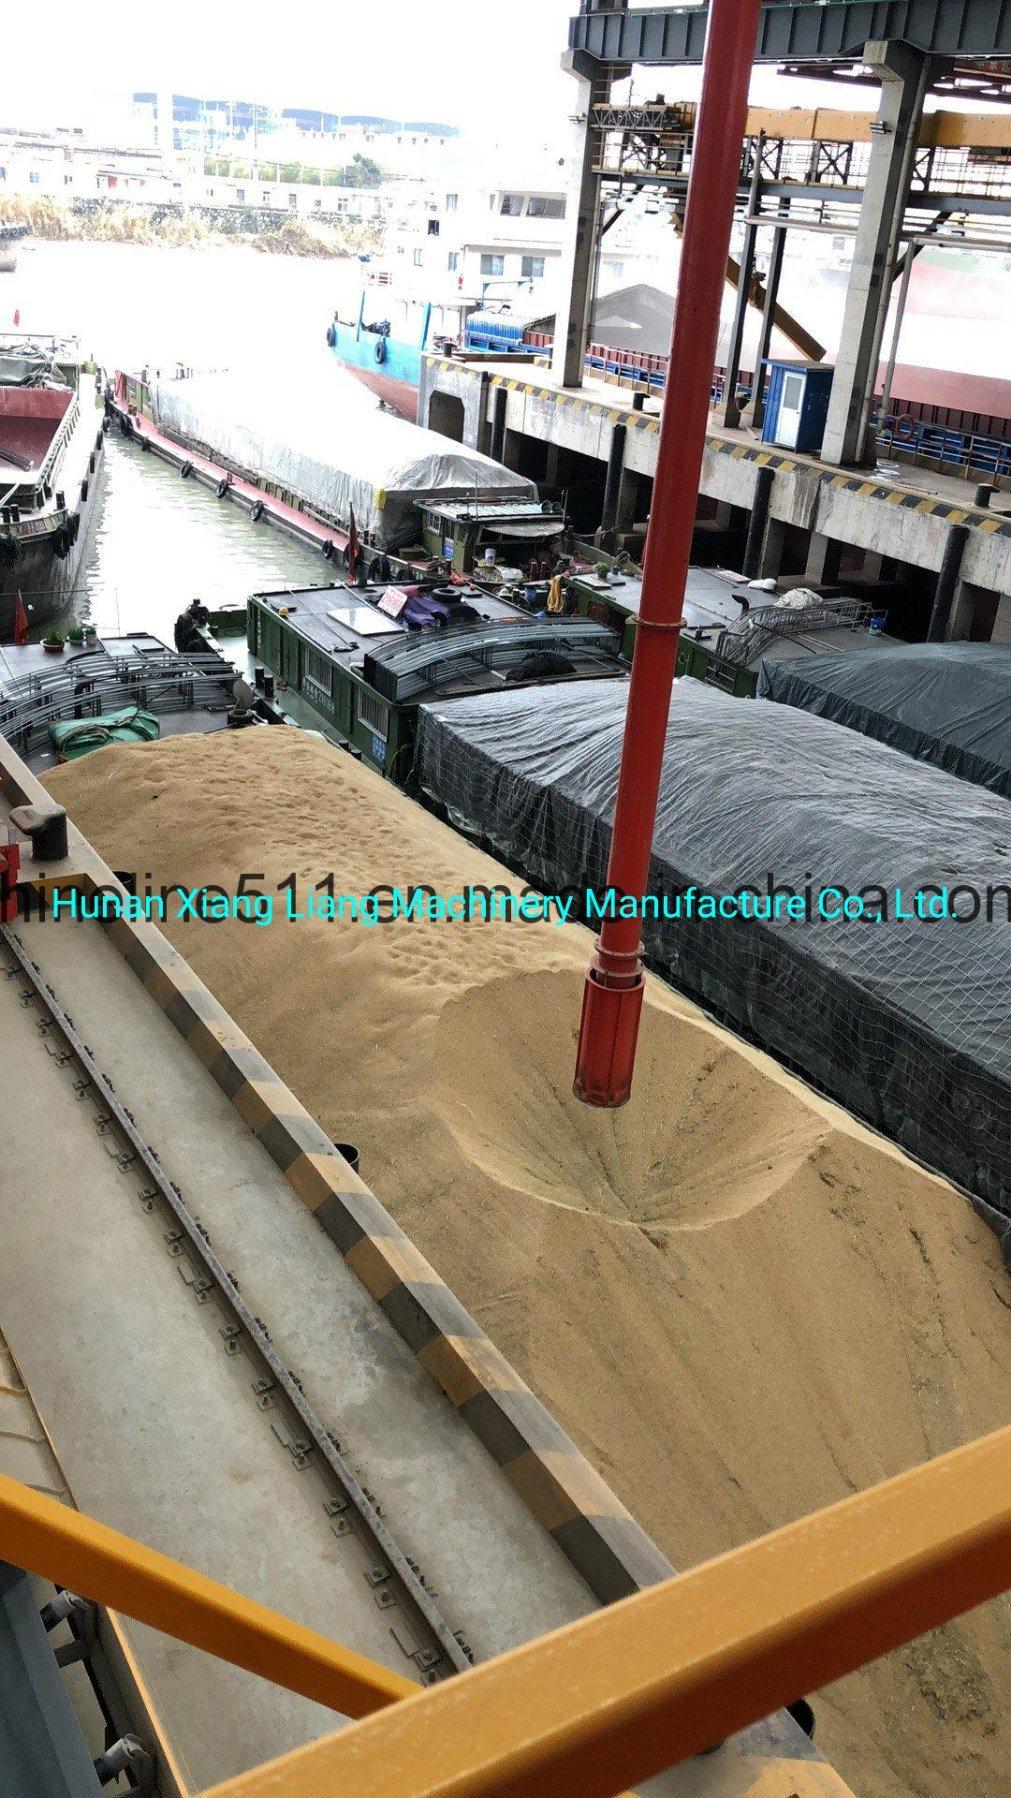 Heat Resistant Granular Materials Xiangliang Brand Gran Pump Port Unloader